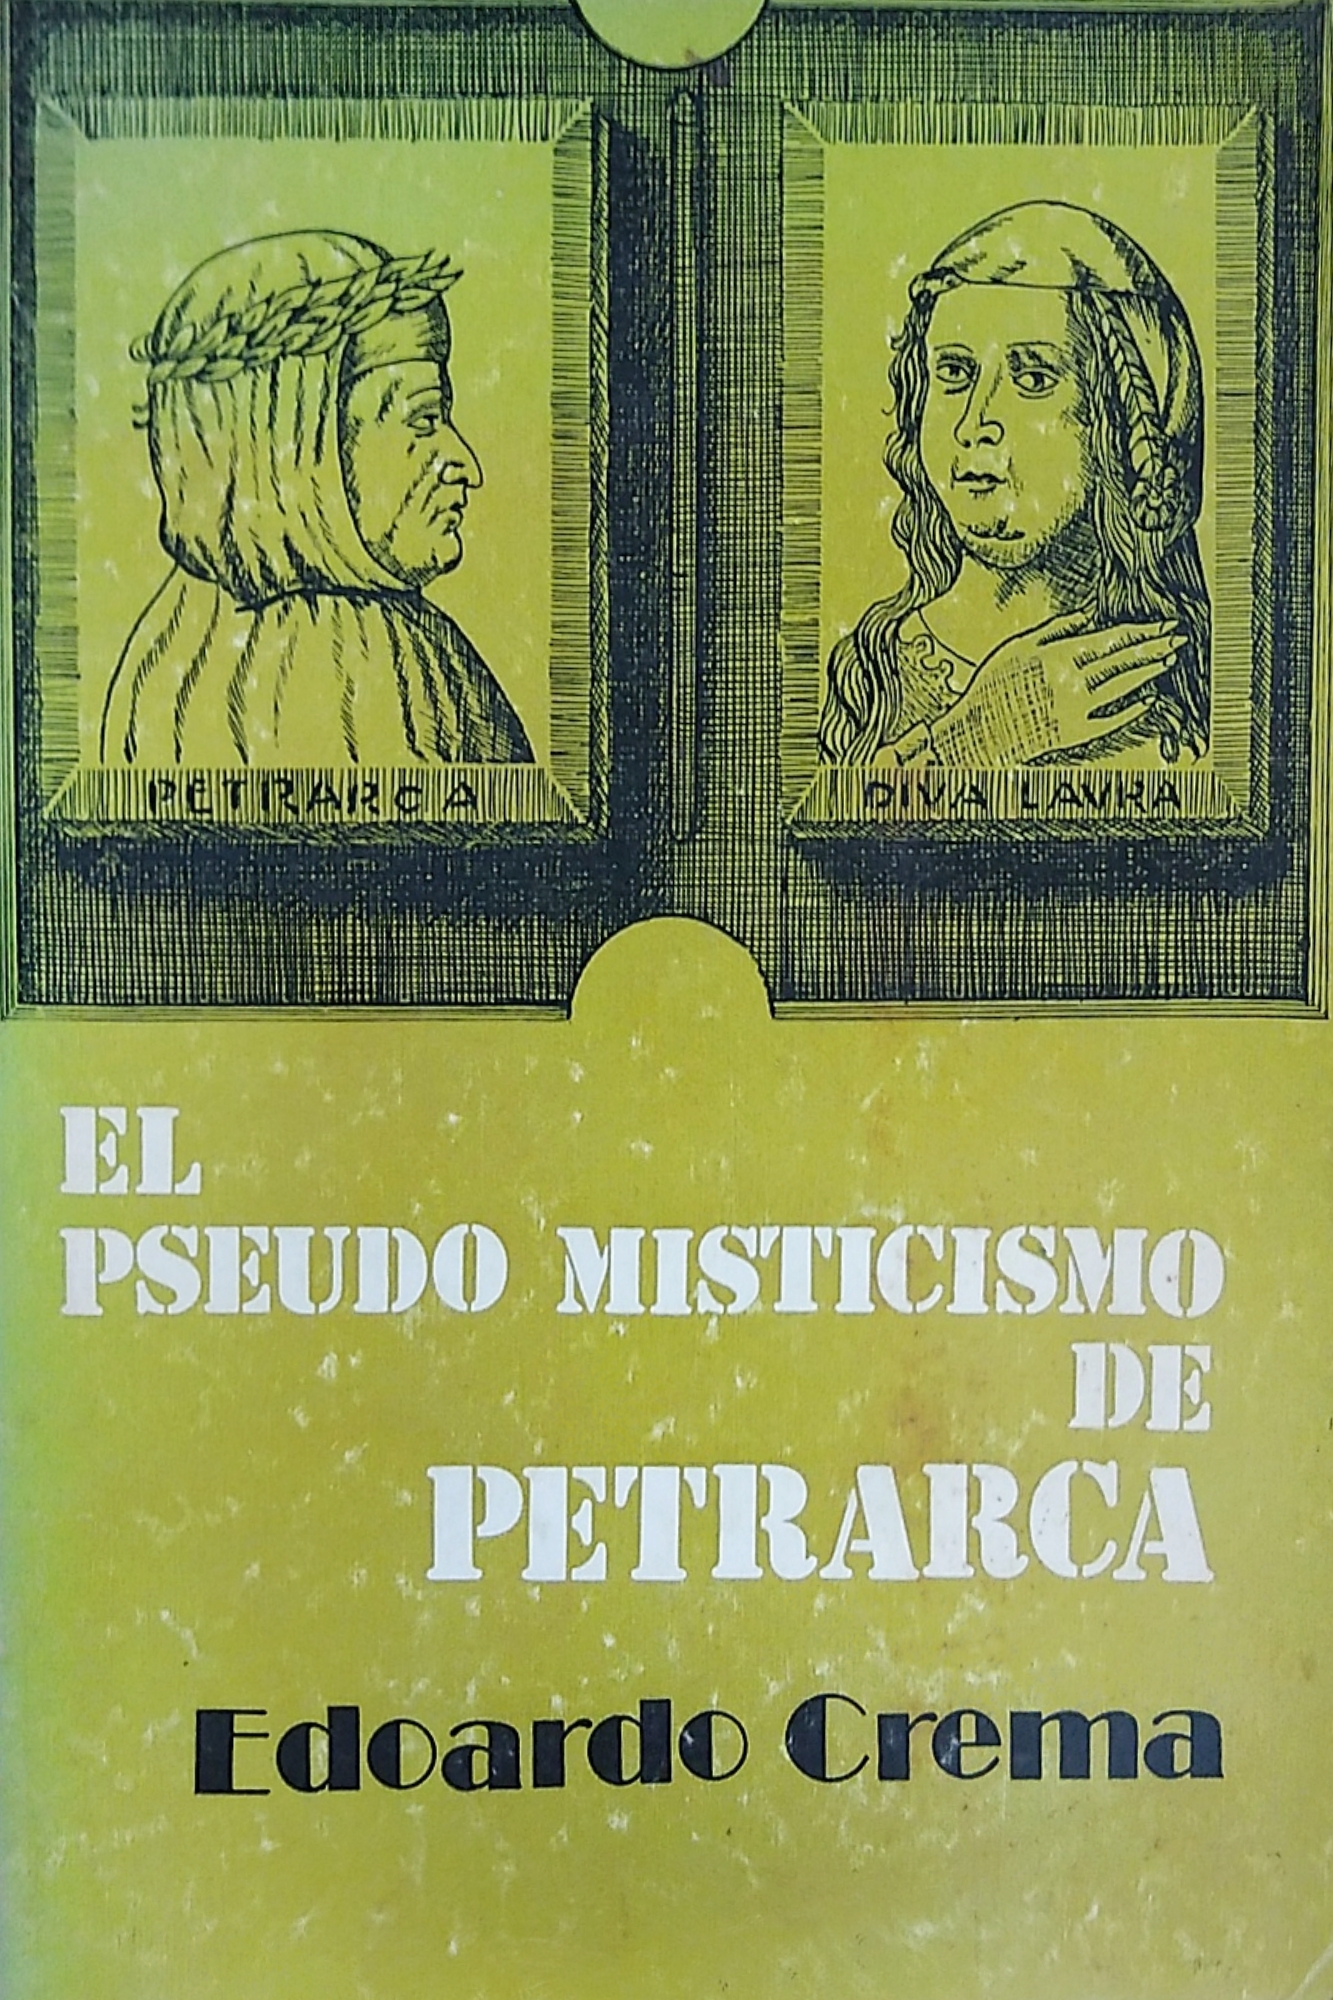 El pseudo misticismo de Petrarca